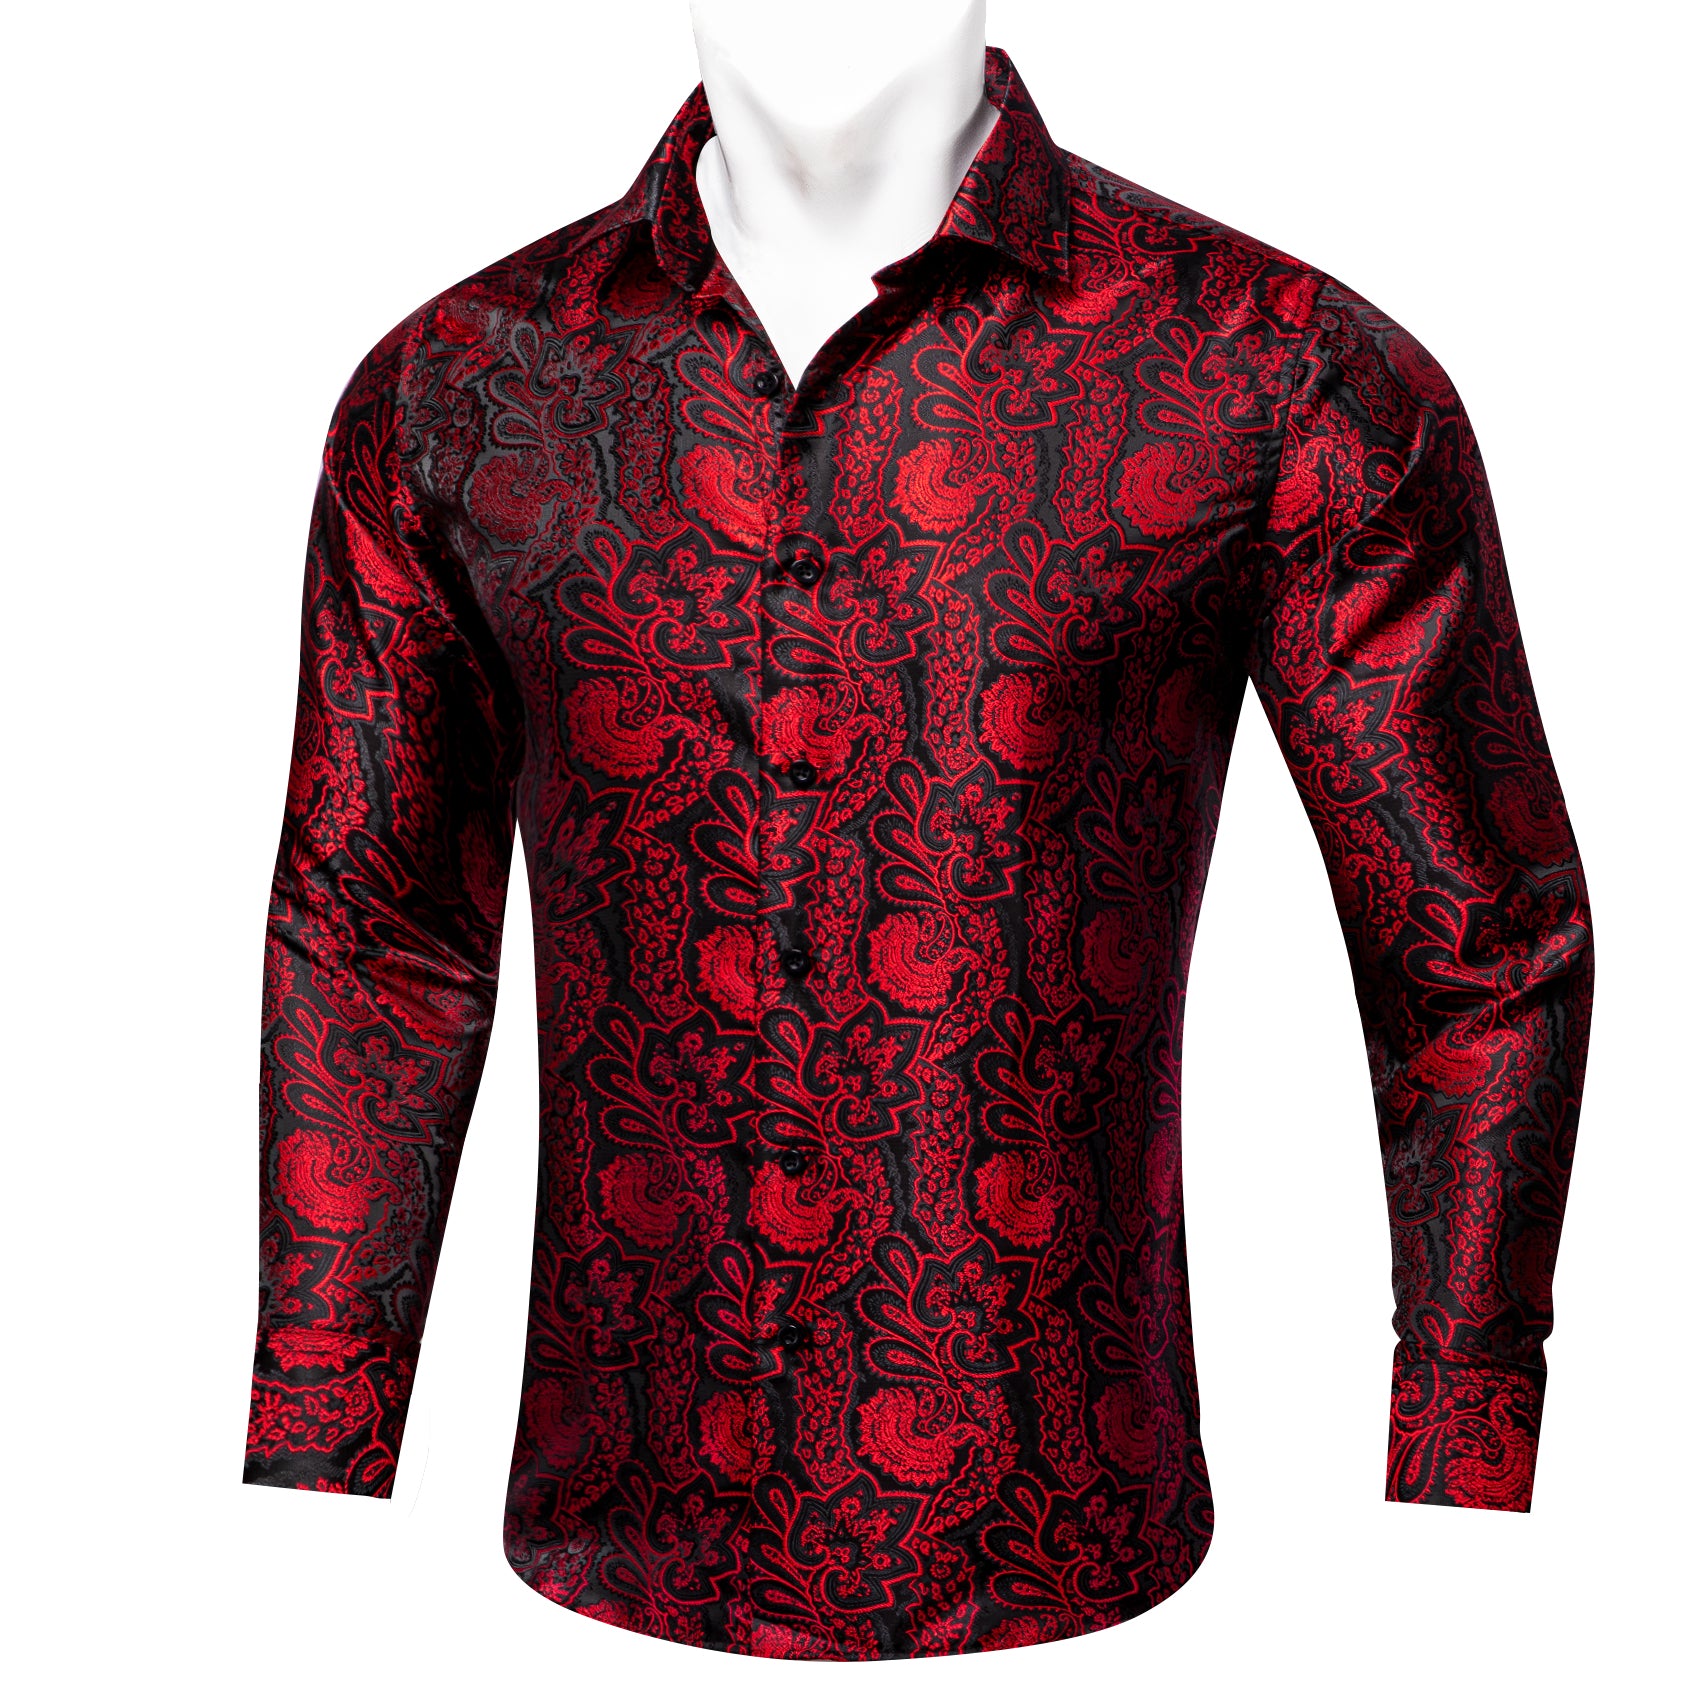 Barry.wang Black Red Paisley Men's Silk Shirt